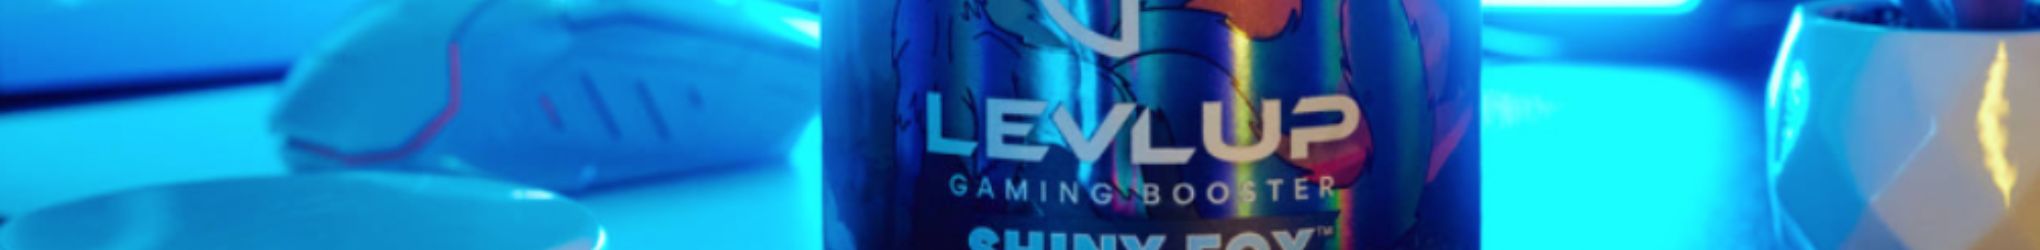 Levl Up Gaming Booster Banner